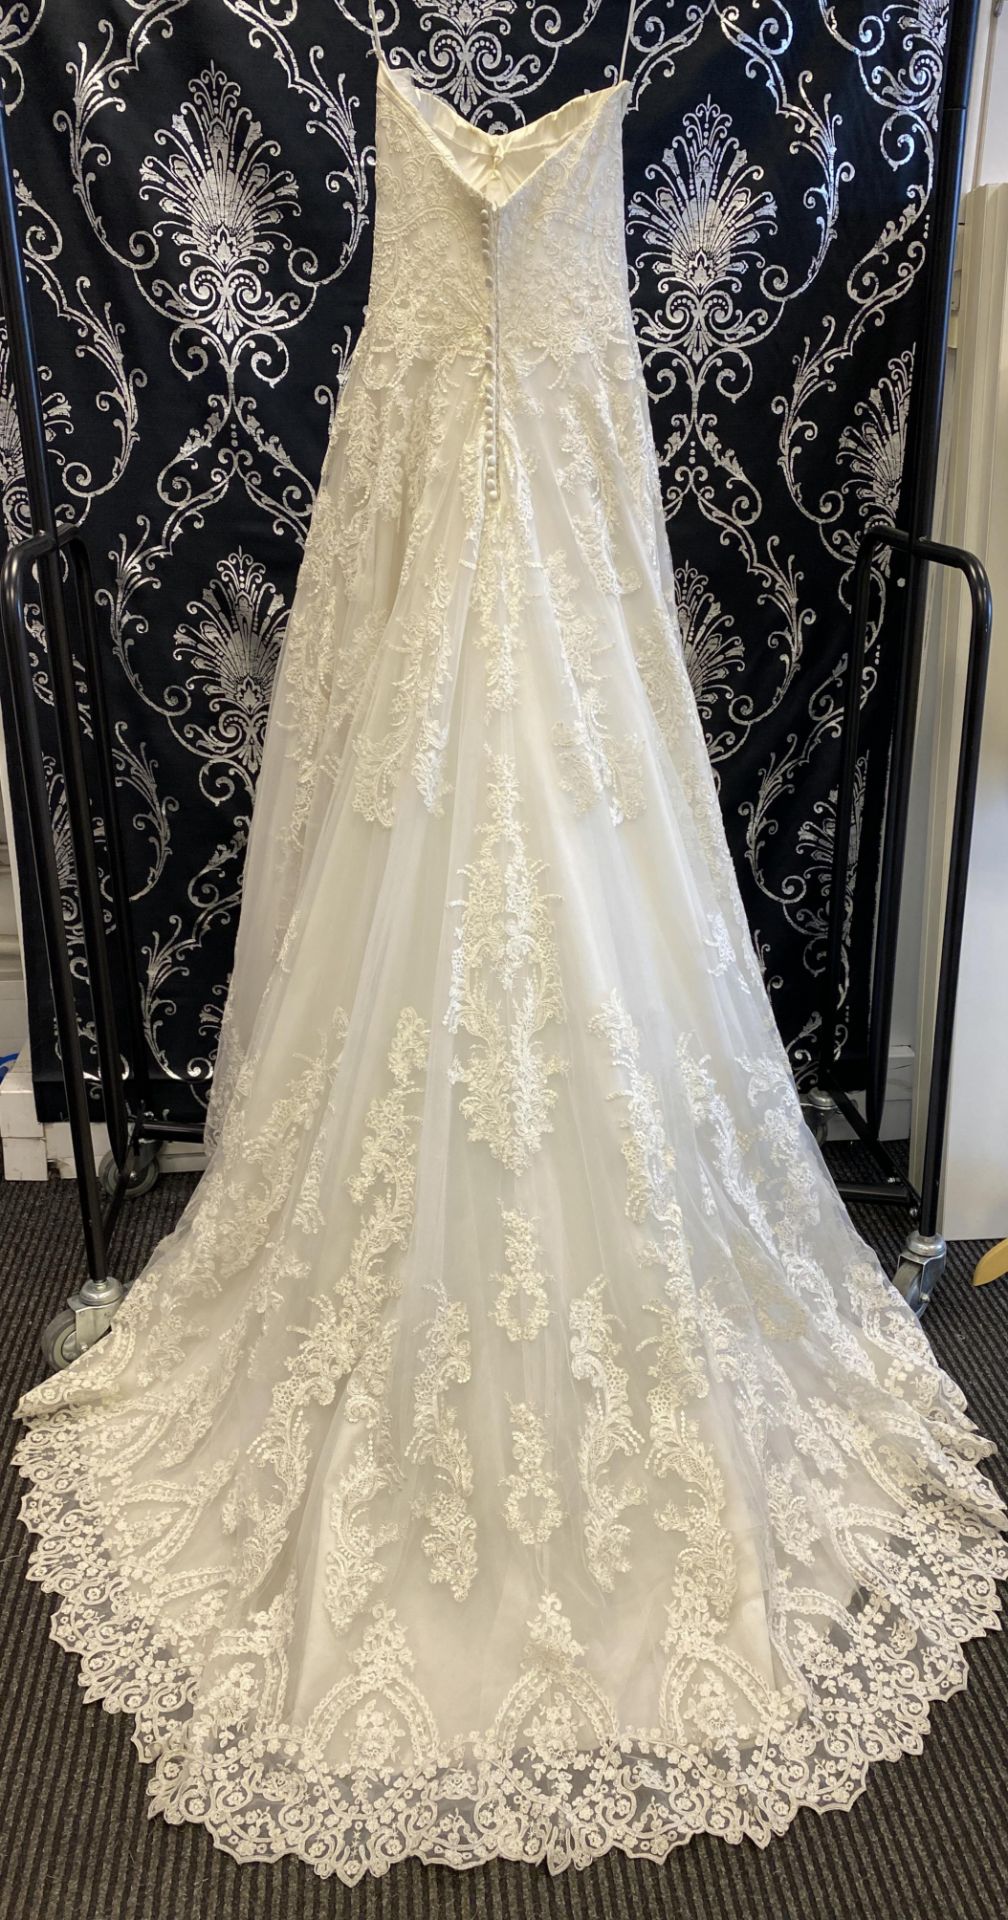 1 x MORI LEE '2787' Stunning Strapless Lace And Chiffon Designer Wedding Dress RRP £1,200 UK 12 - Image 8 of 12